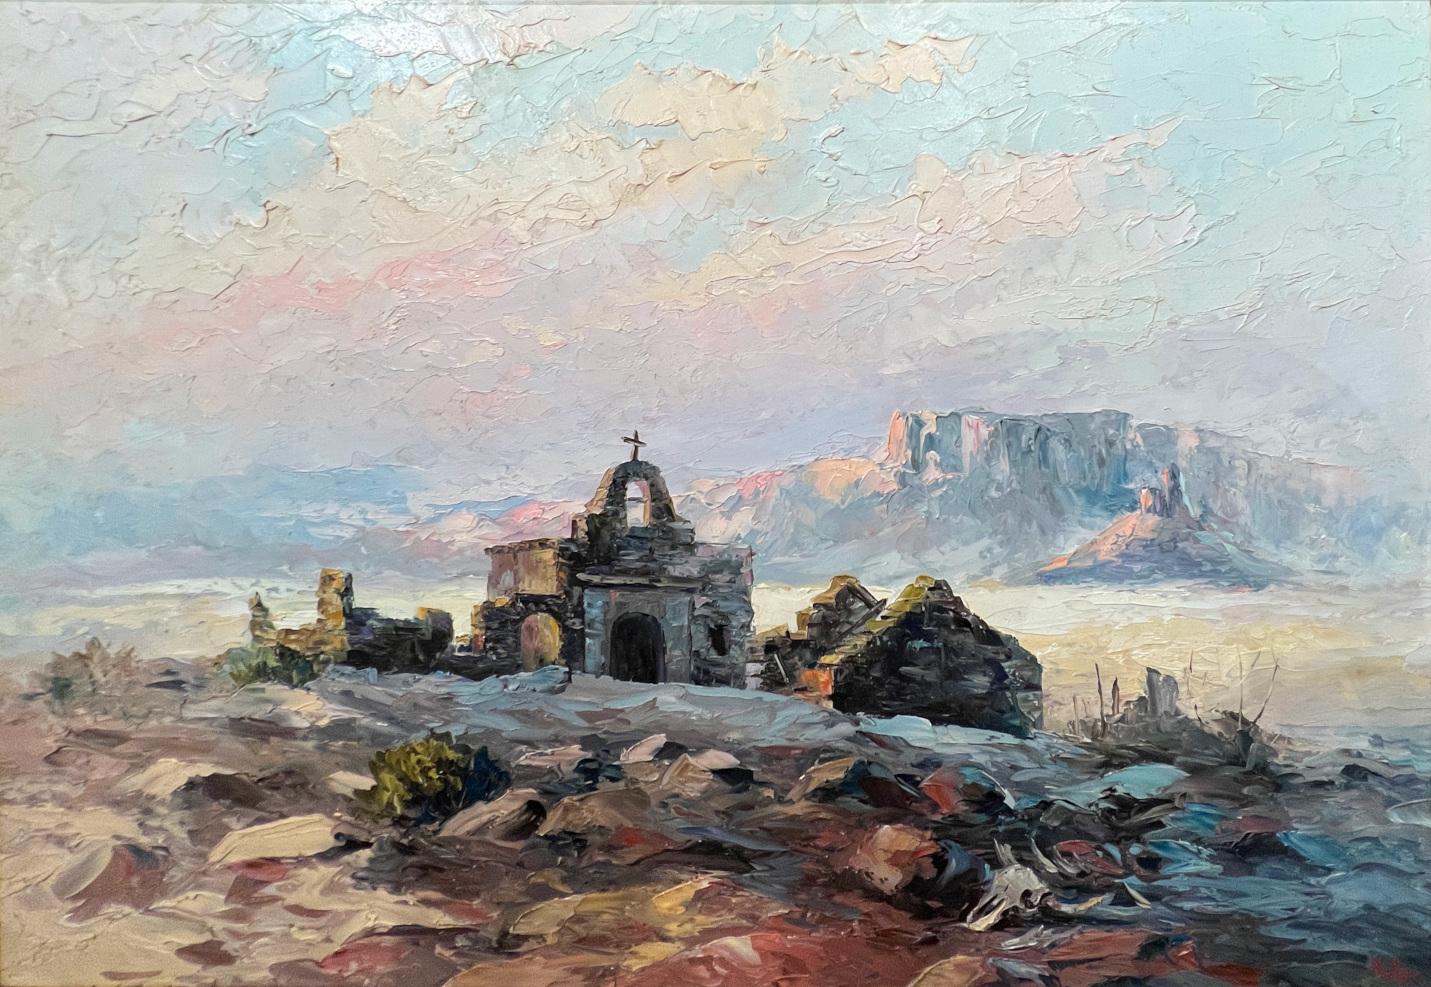 Dalhart Windberg Landscape Painting - "RUINAS EN EL OESTE DE TEXAS" RUINS IN WEST TEXAS